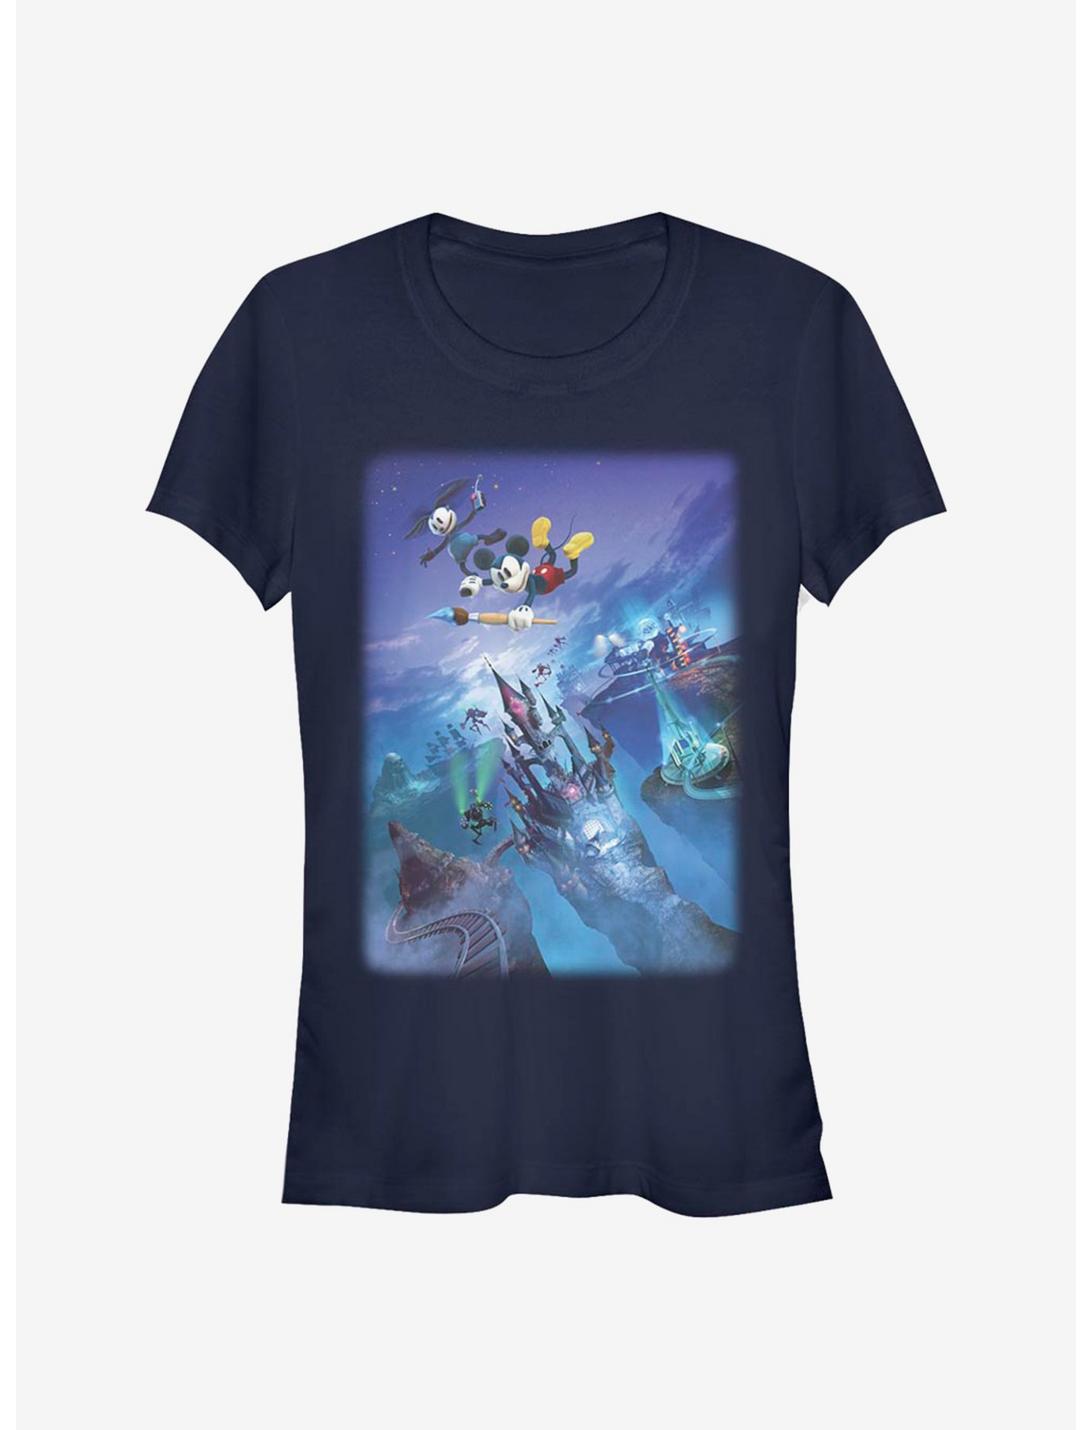 Disney Epic Mickey Flying By Poster Girls T-Shirt, NAVY, hi-res